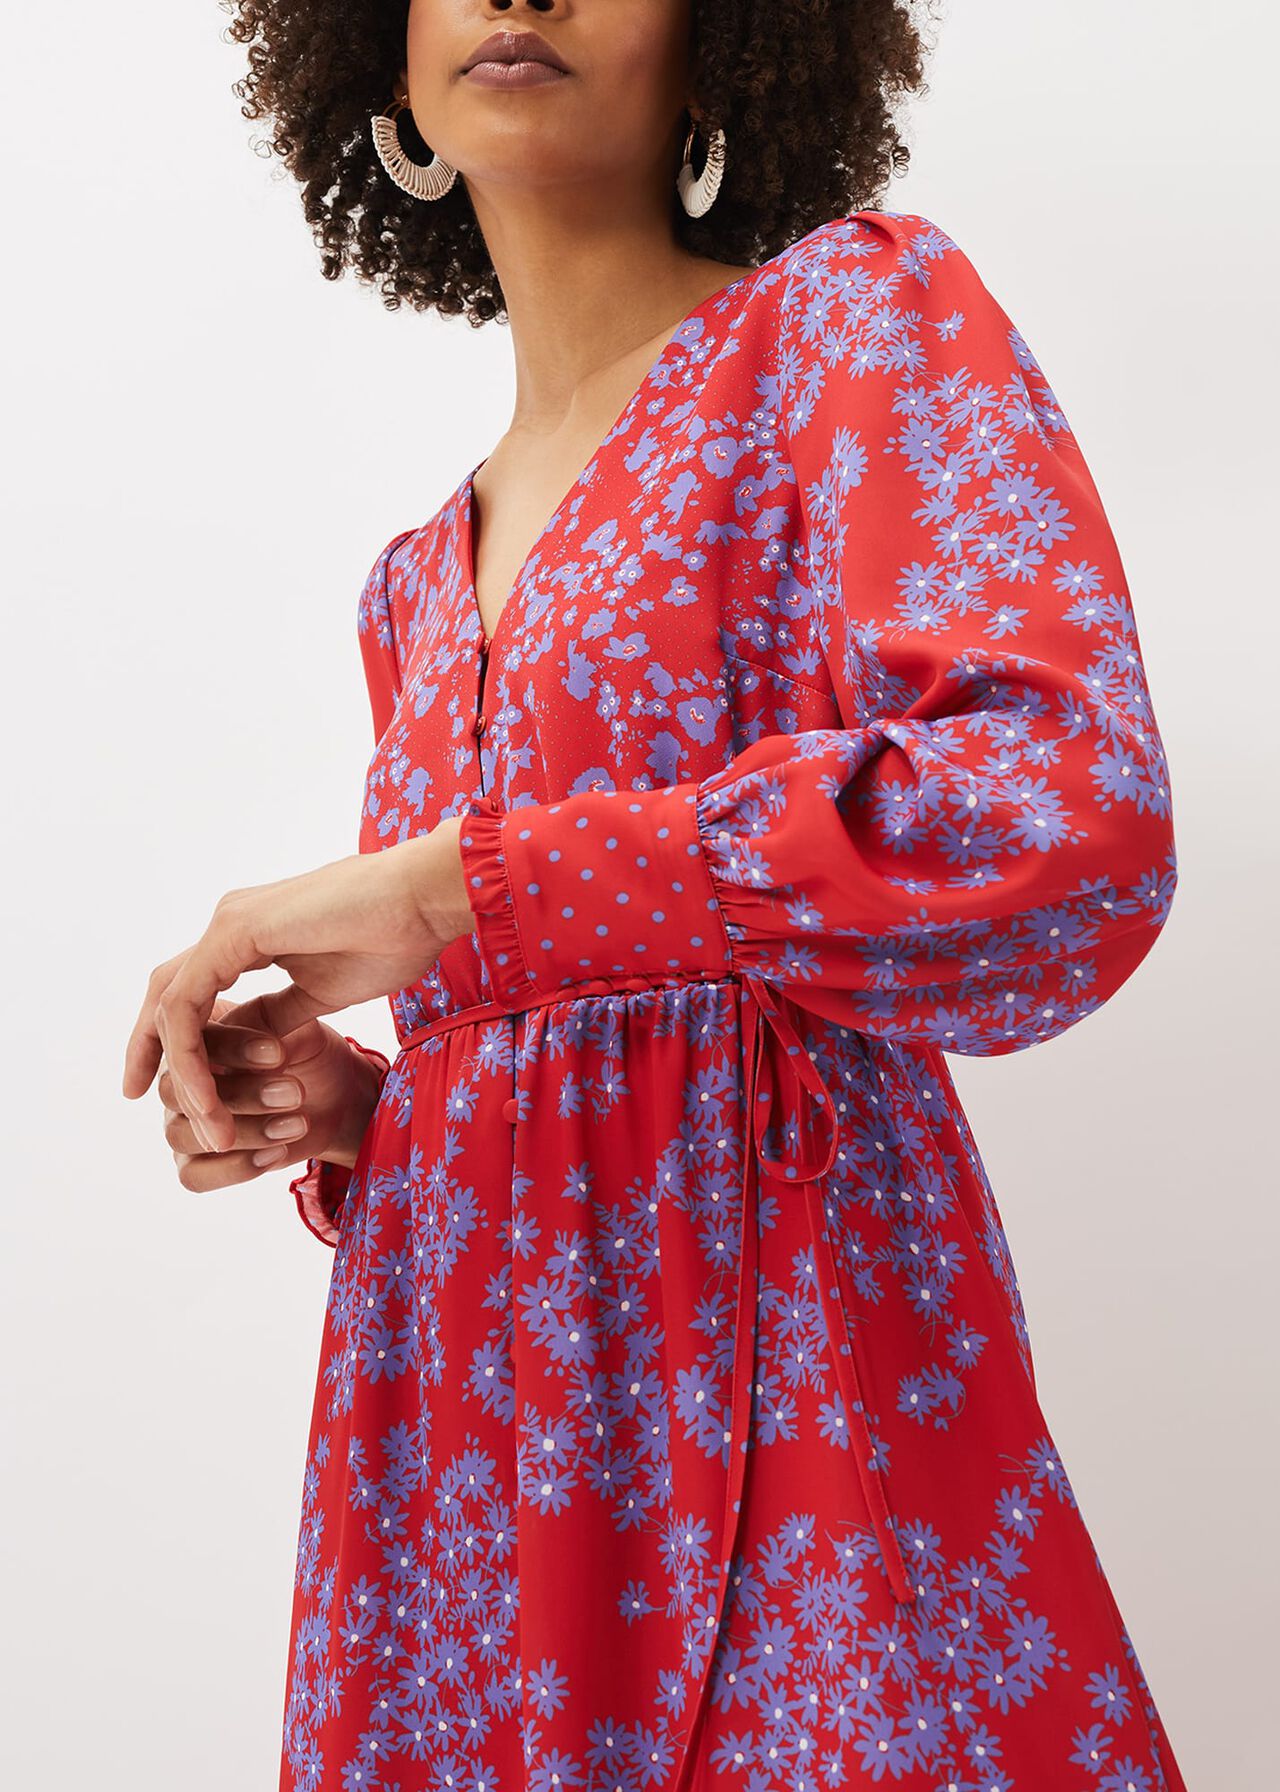 Zahara Floral And Spot Print Dress